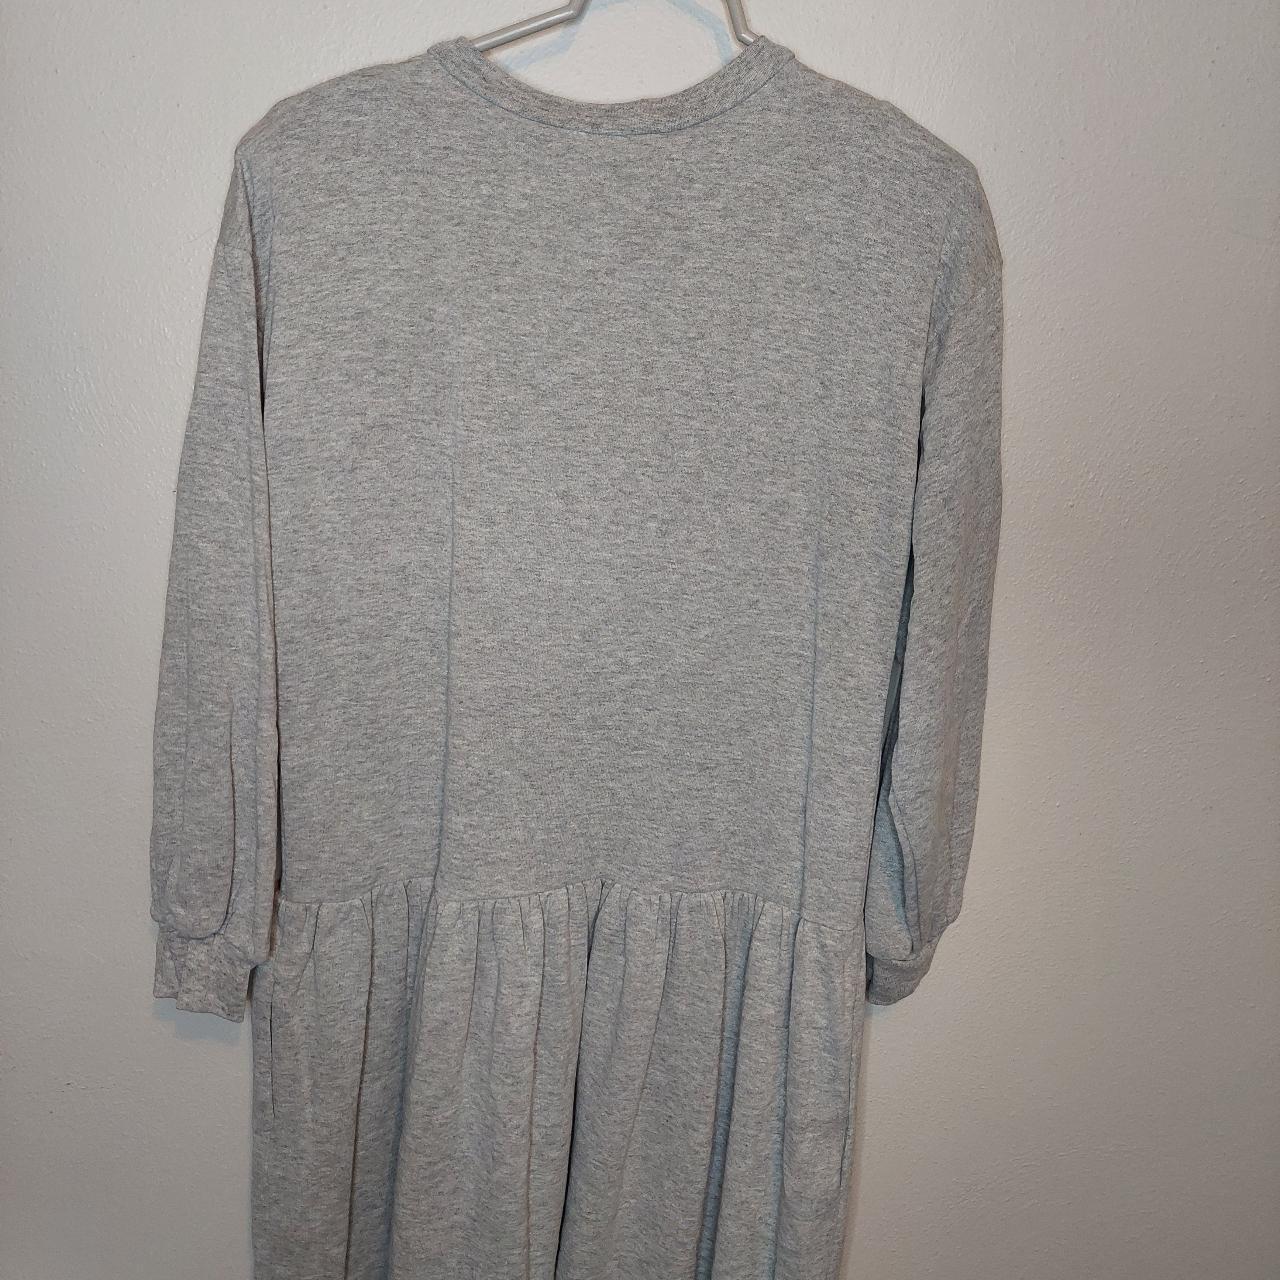 Product Image 2 - Impromptu dress, size large, gray,